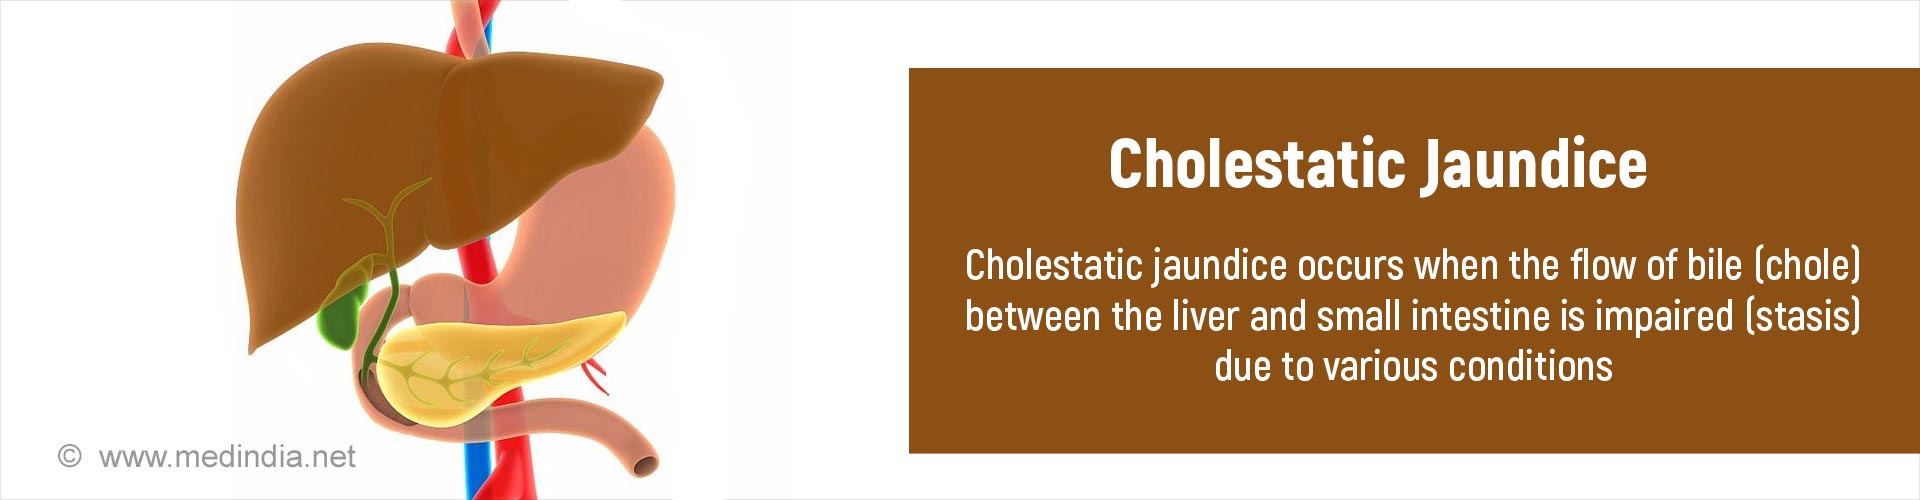 Cholestatic Jaundice Causes Symptoms Risk Factors Diagnosis Treatment And Prevention 3966